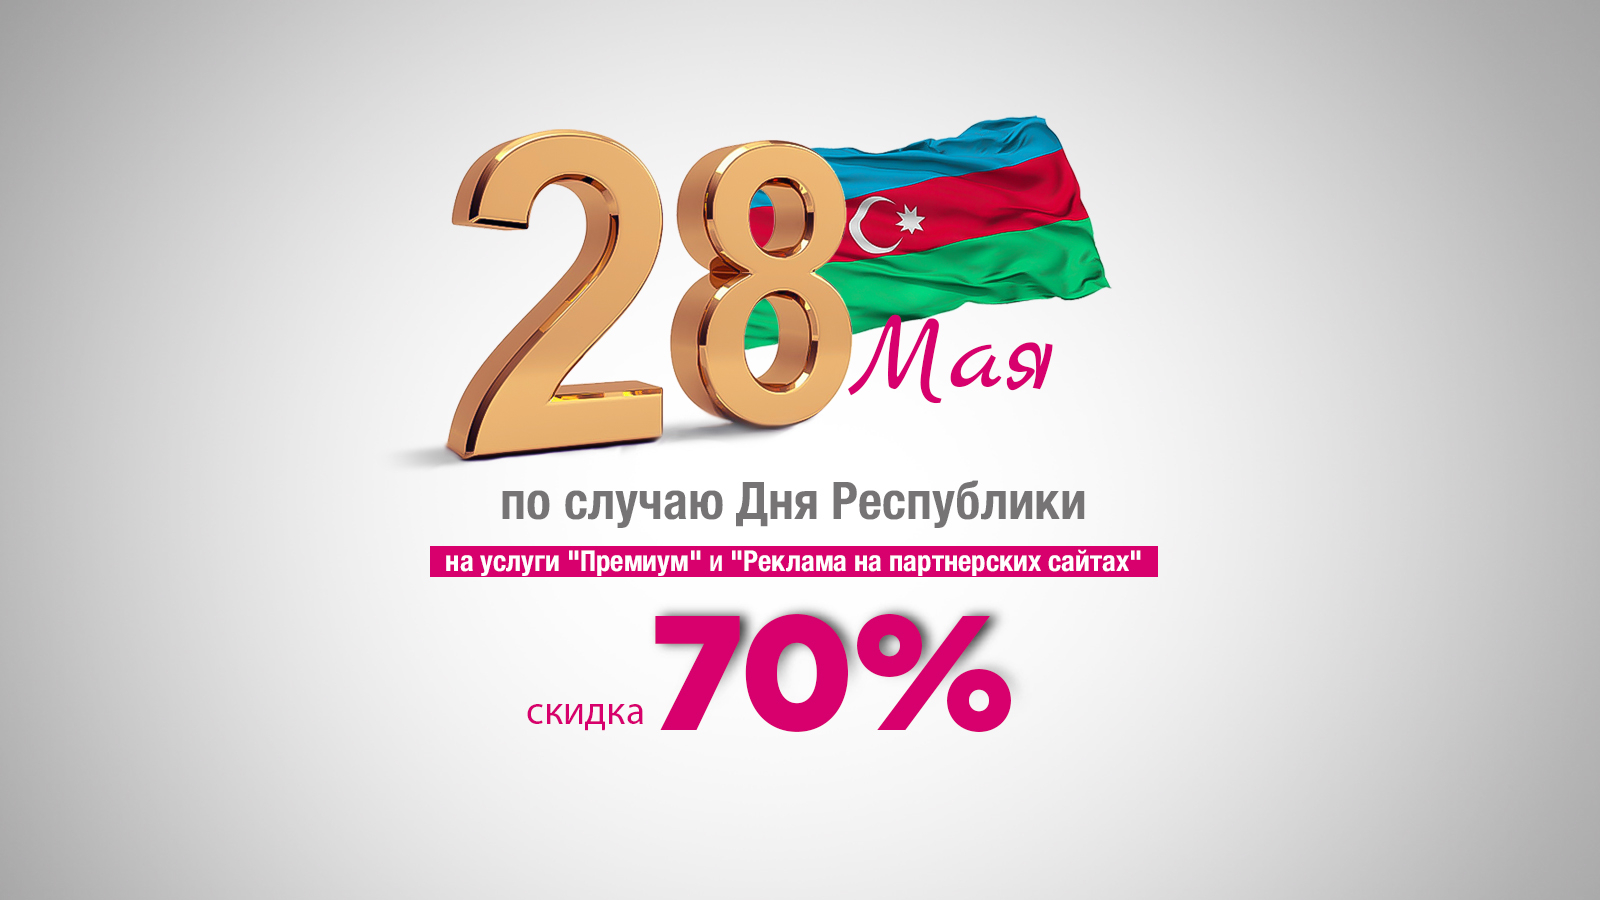 70%-ная скидка в связи с Днем Республики от Tut.az